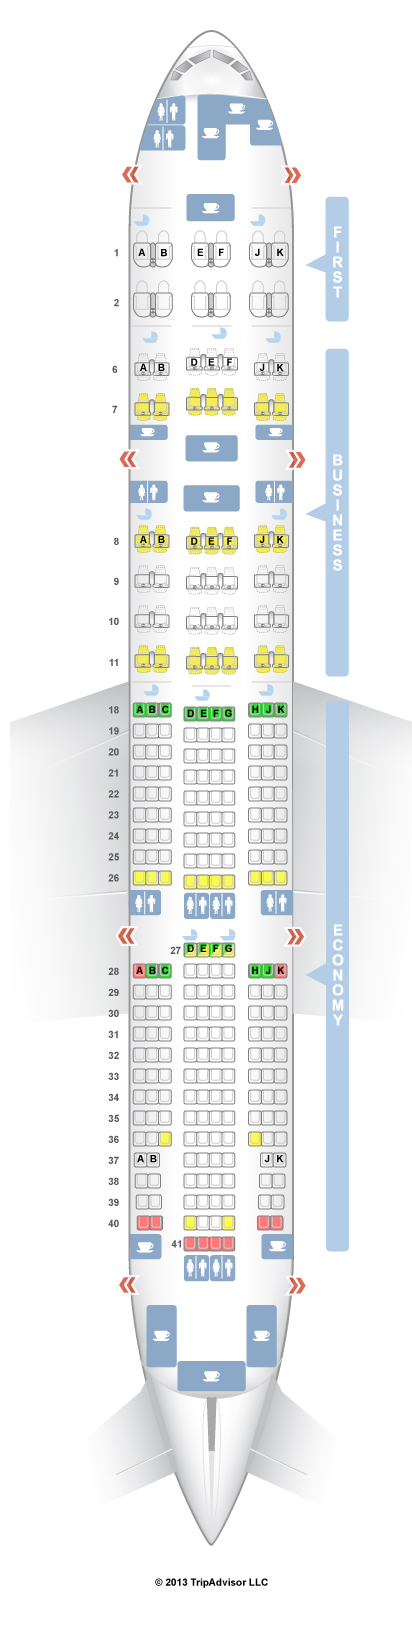 Air Canada Aircraft 77w Seating Chart